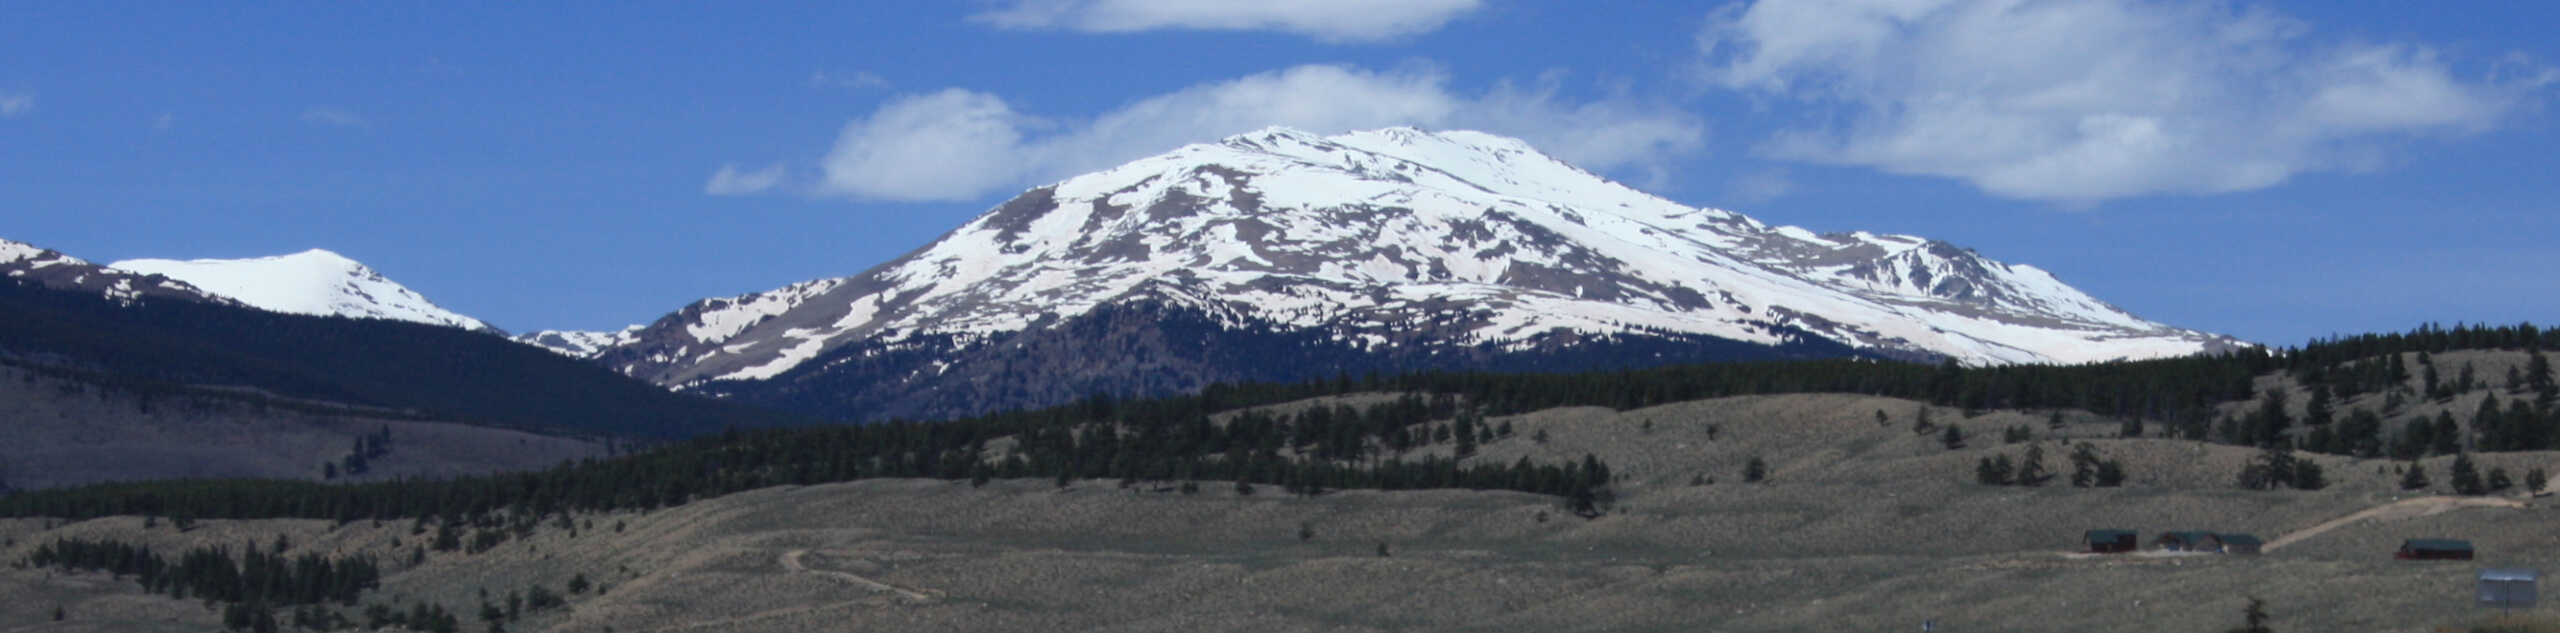 Mount Massive Trail